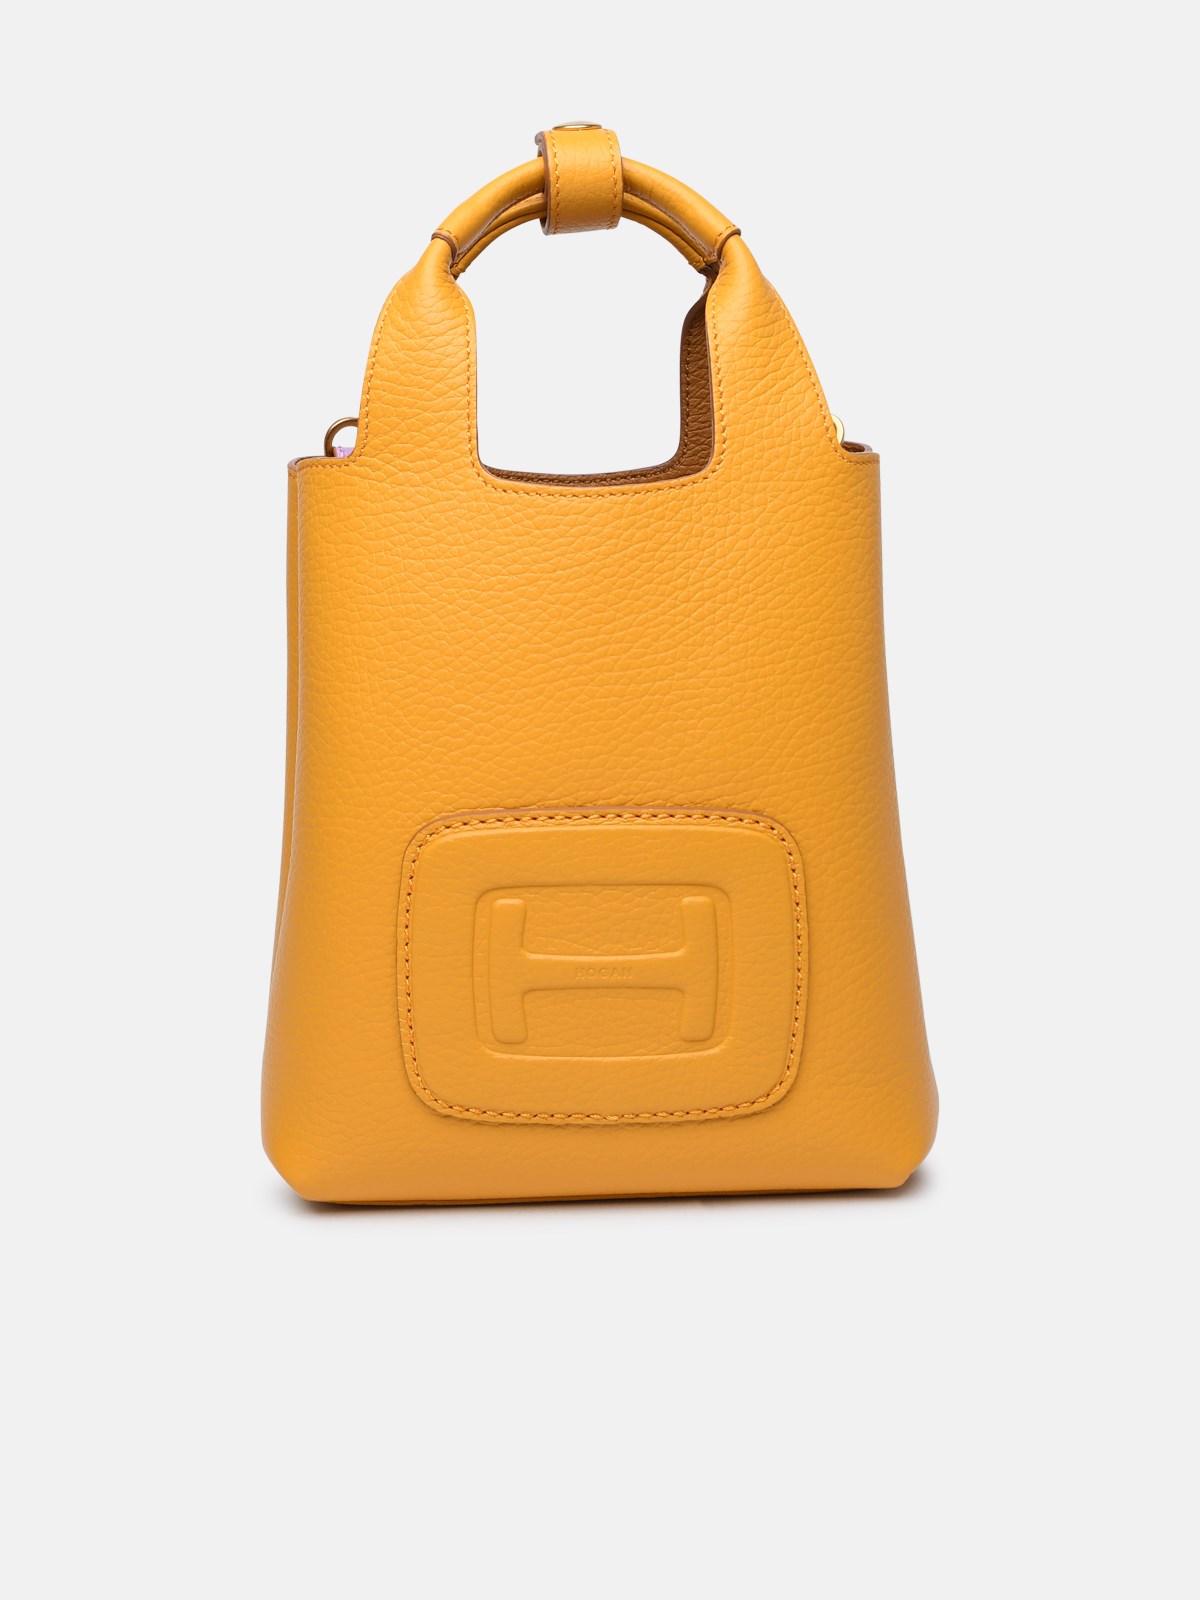 Hogan Yellow Leather Bag